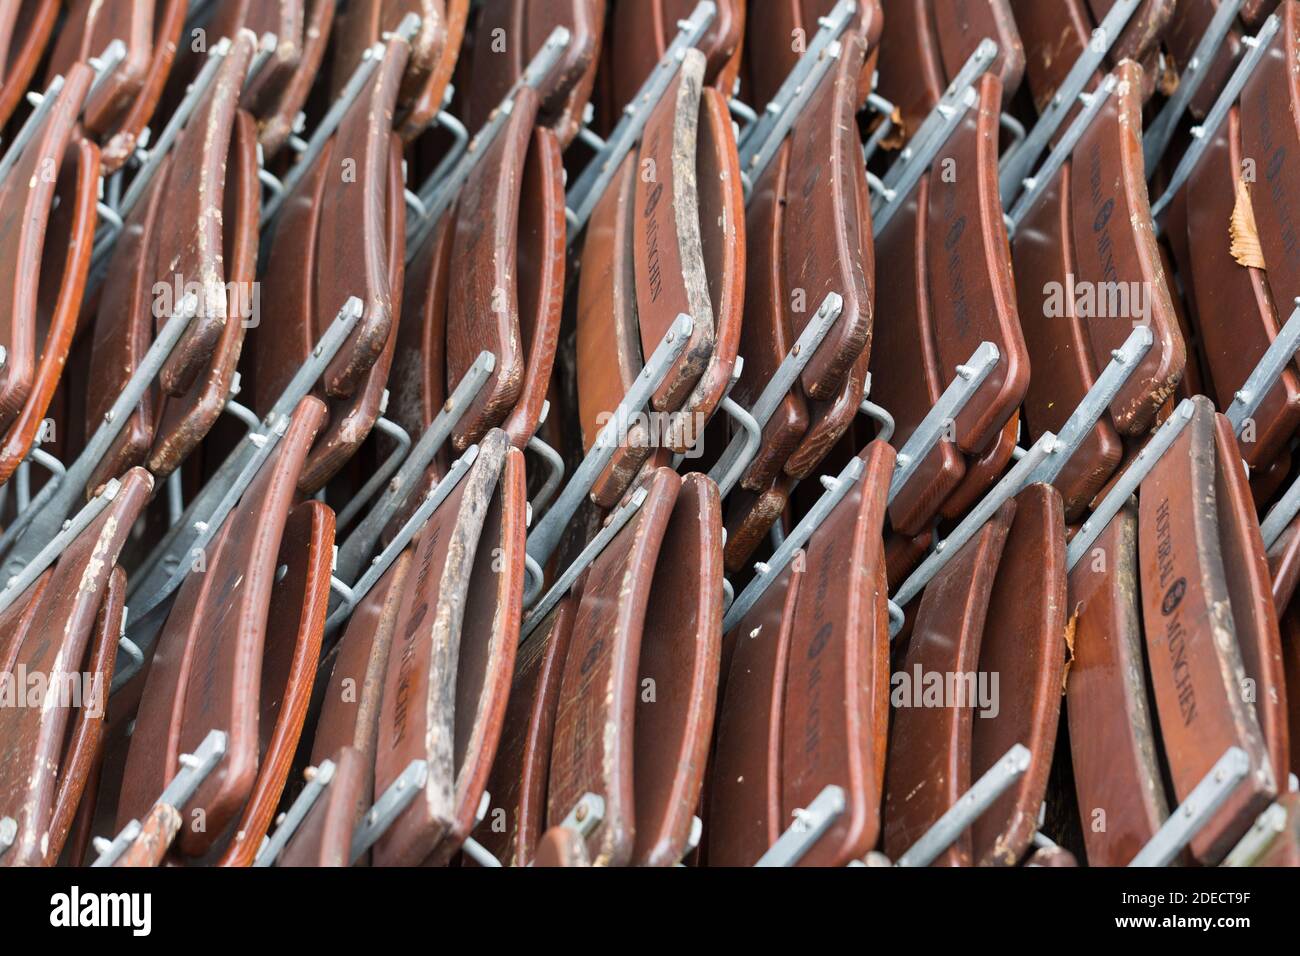 Munich, Bavaria / Germany - Nov 12, 2020: Close up of folded beer garden chairs. Captured during the November lockdown (Covid-19 / Coronavirus). Stock Photo